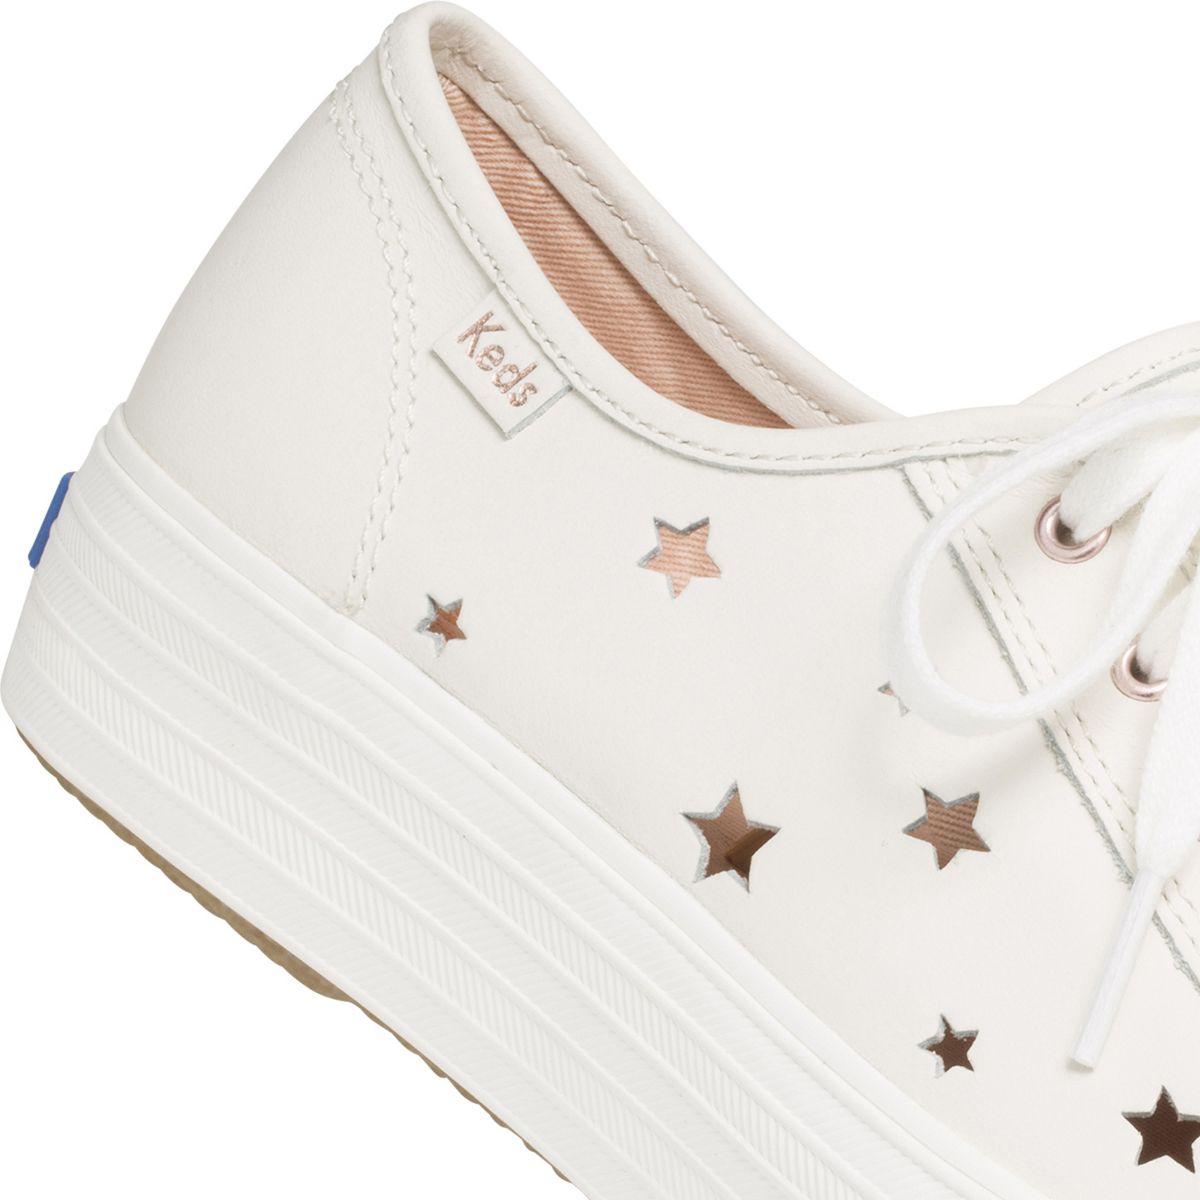 keds star shoes